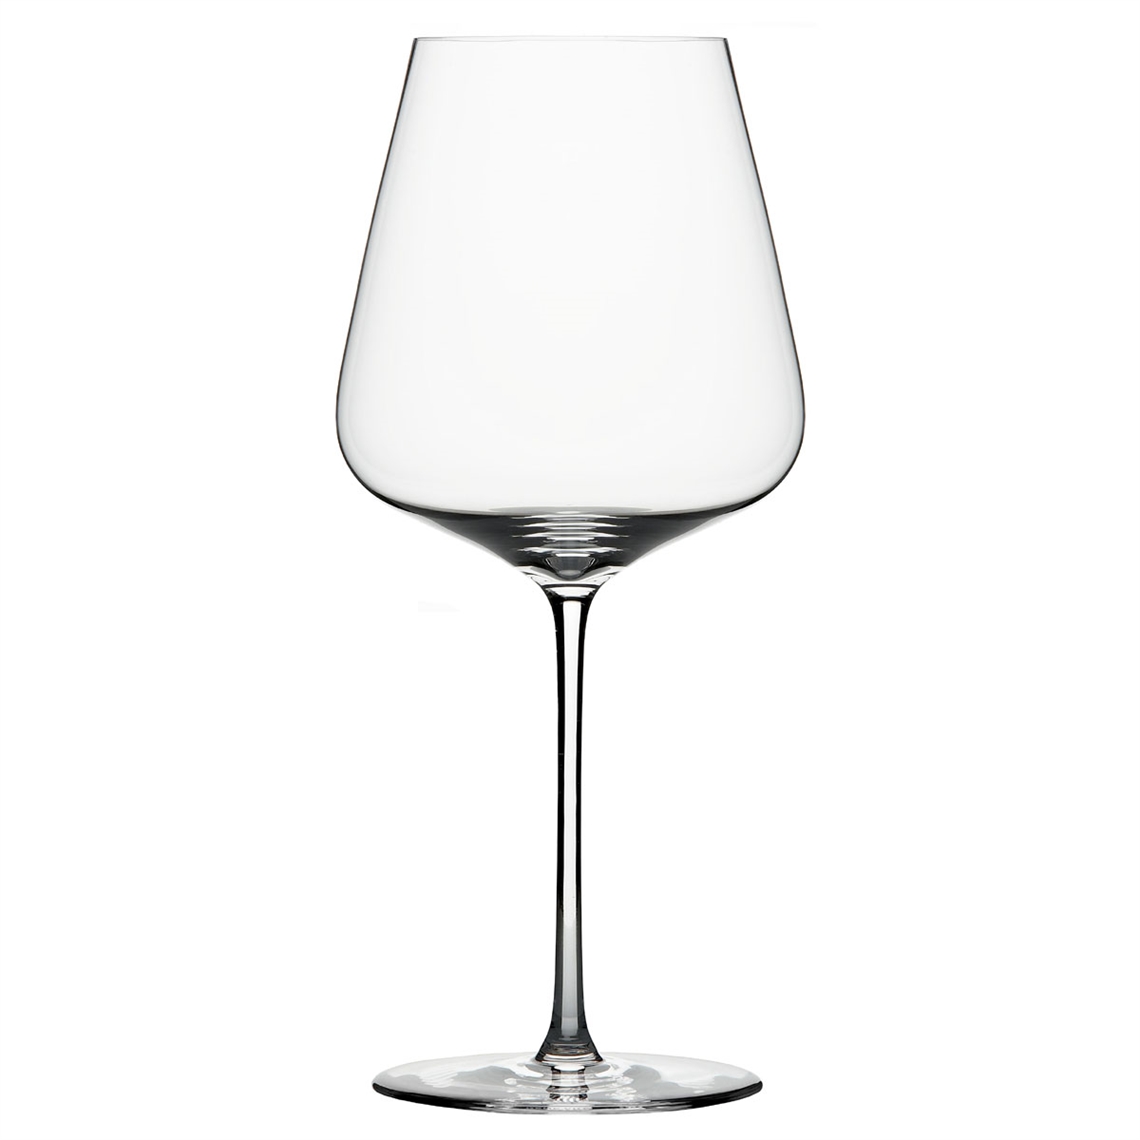 View more grassl glass from our Premium Mouth Blown Glassware range